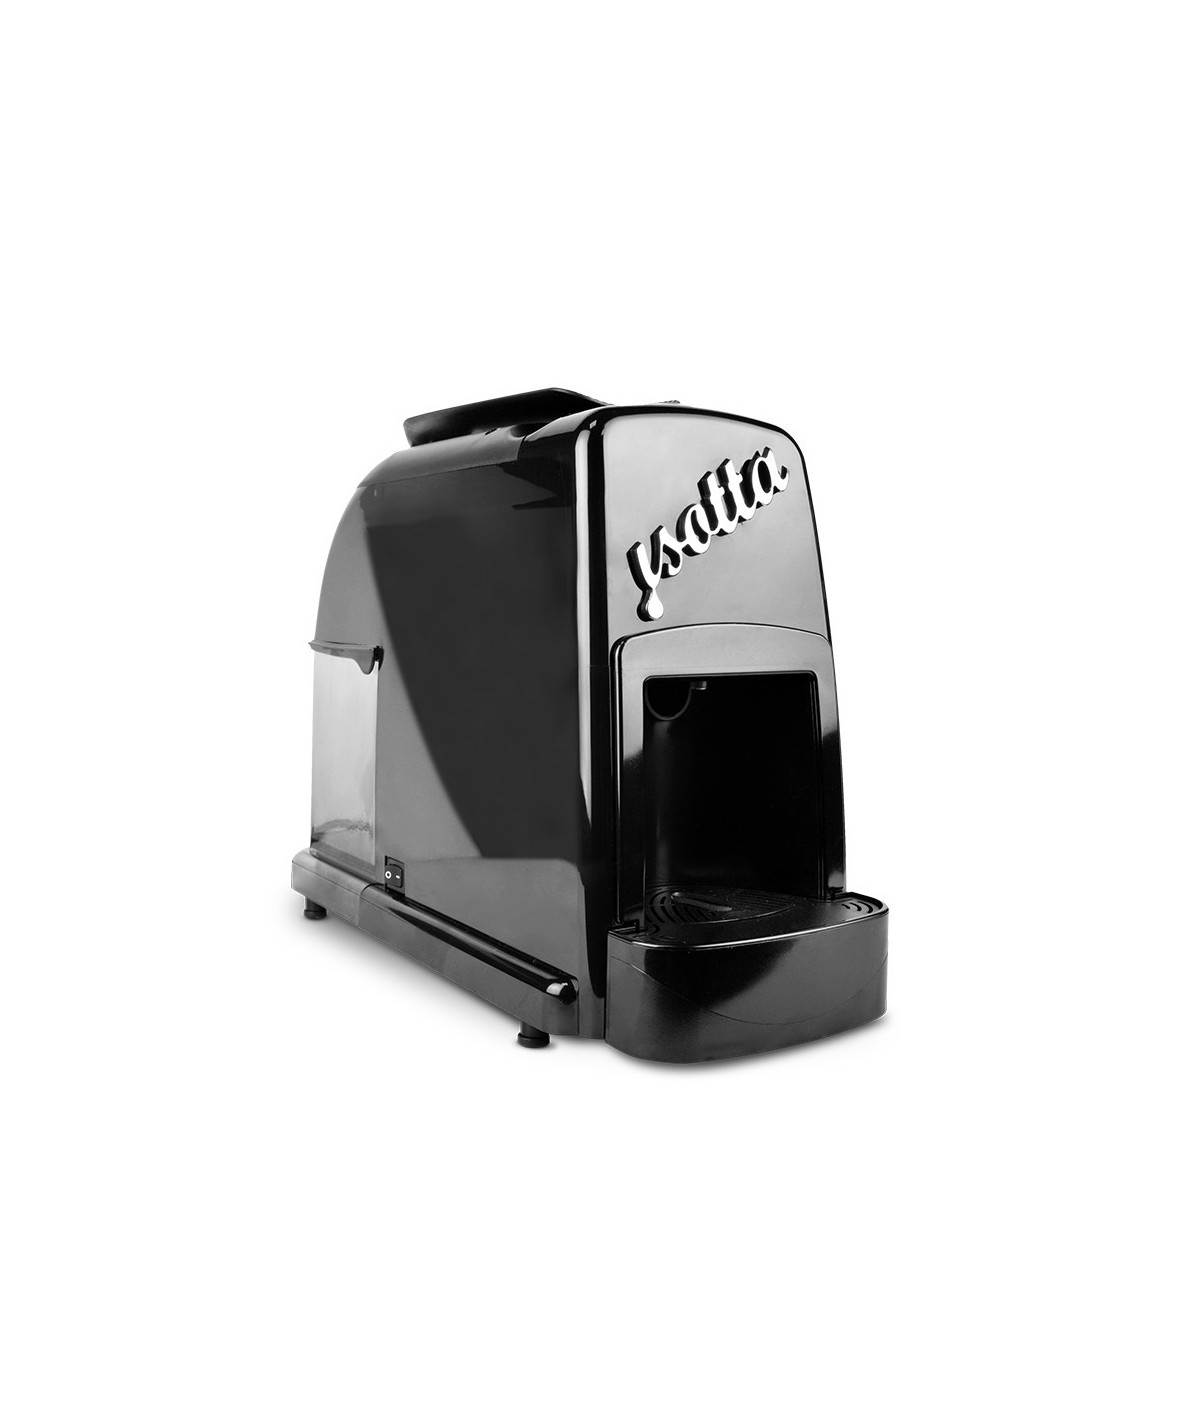 https://mokaor.shop/481-large_default/macchine-didiesse-isotta-capsule-fap-espresso-point.jpg